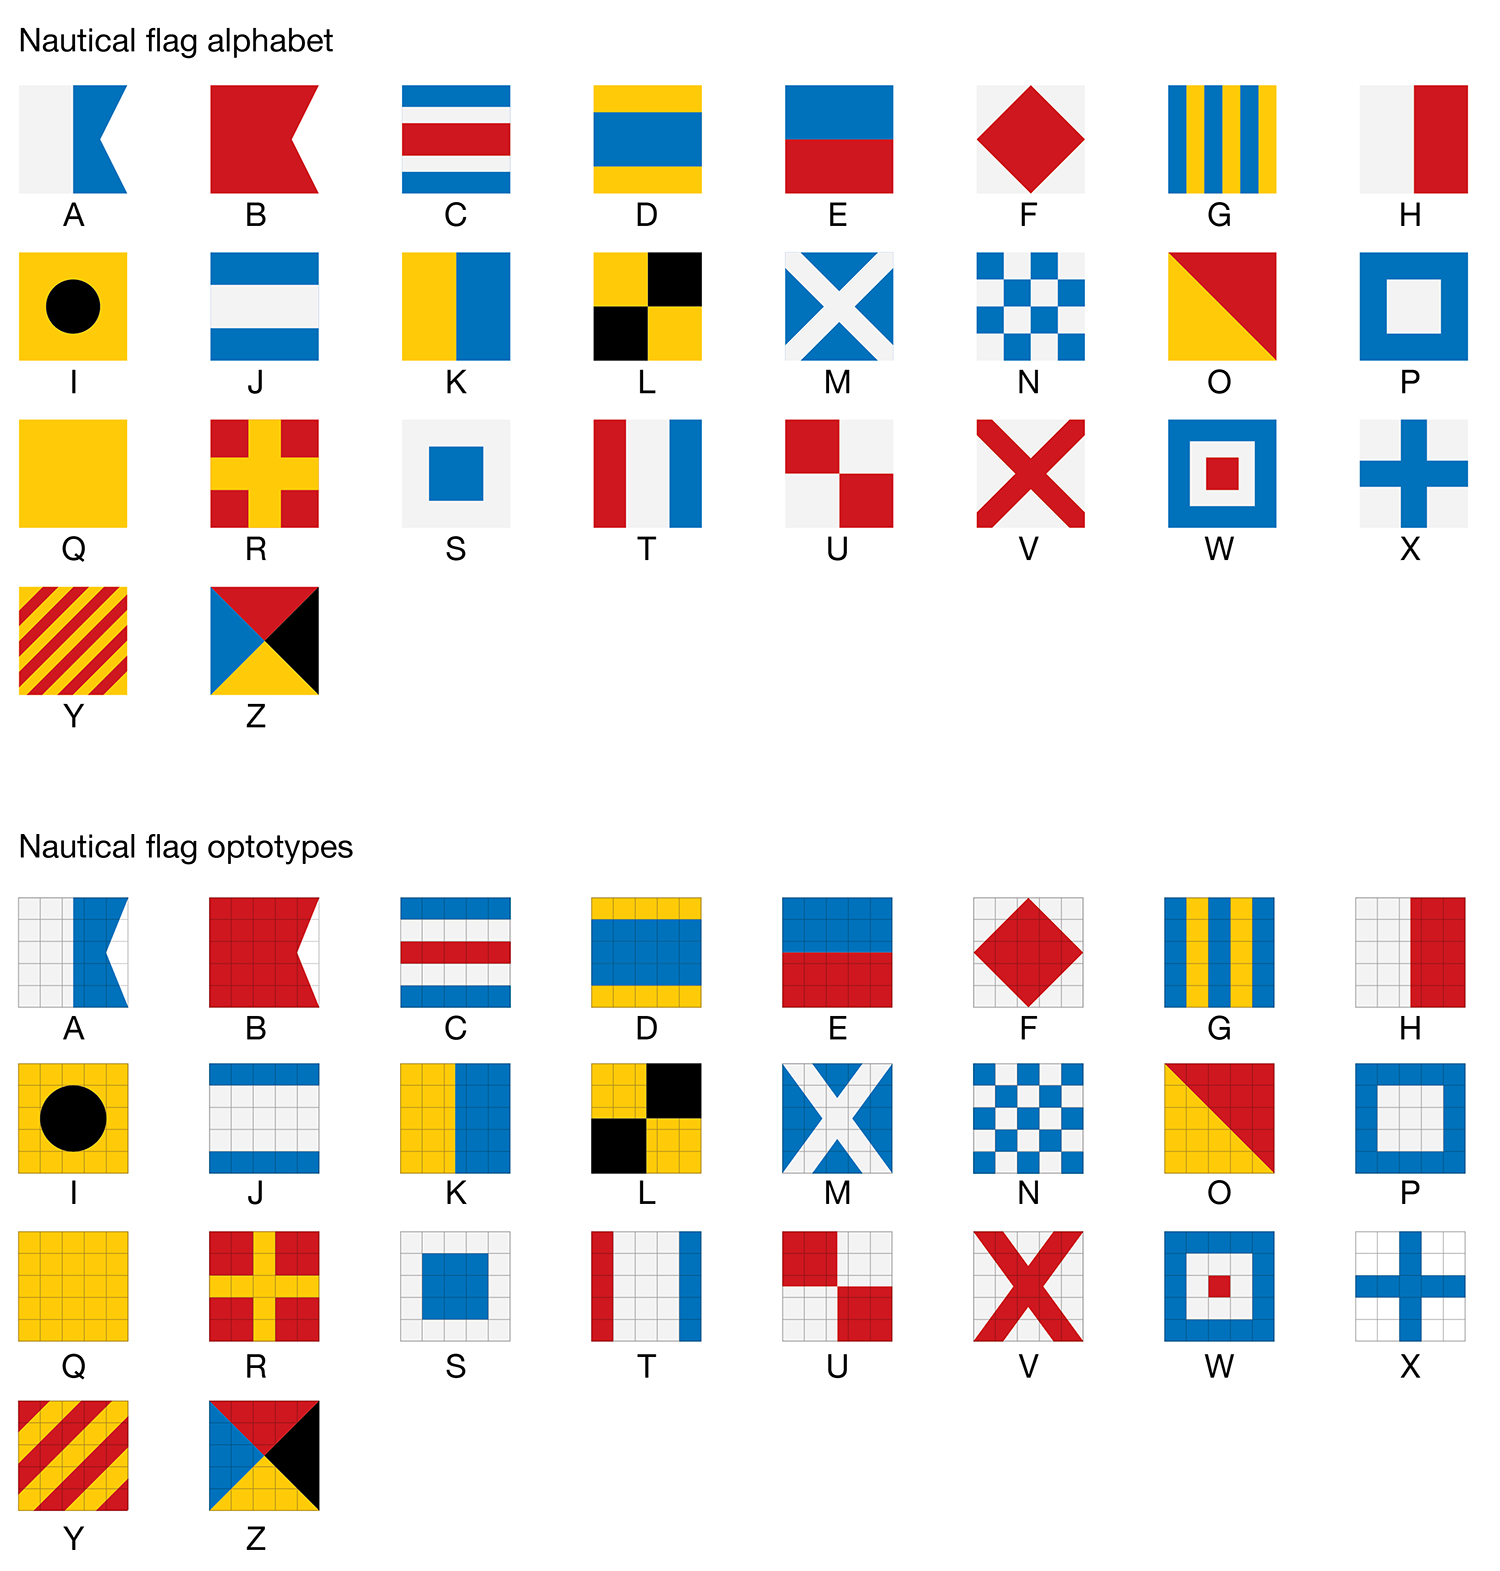 Snellen optotypes for the nautical flag alphabet. / Martin Krzywinski @MKrzywinski mkweb.bcgsc.ca